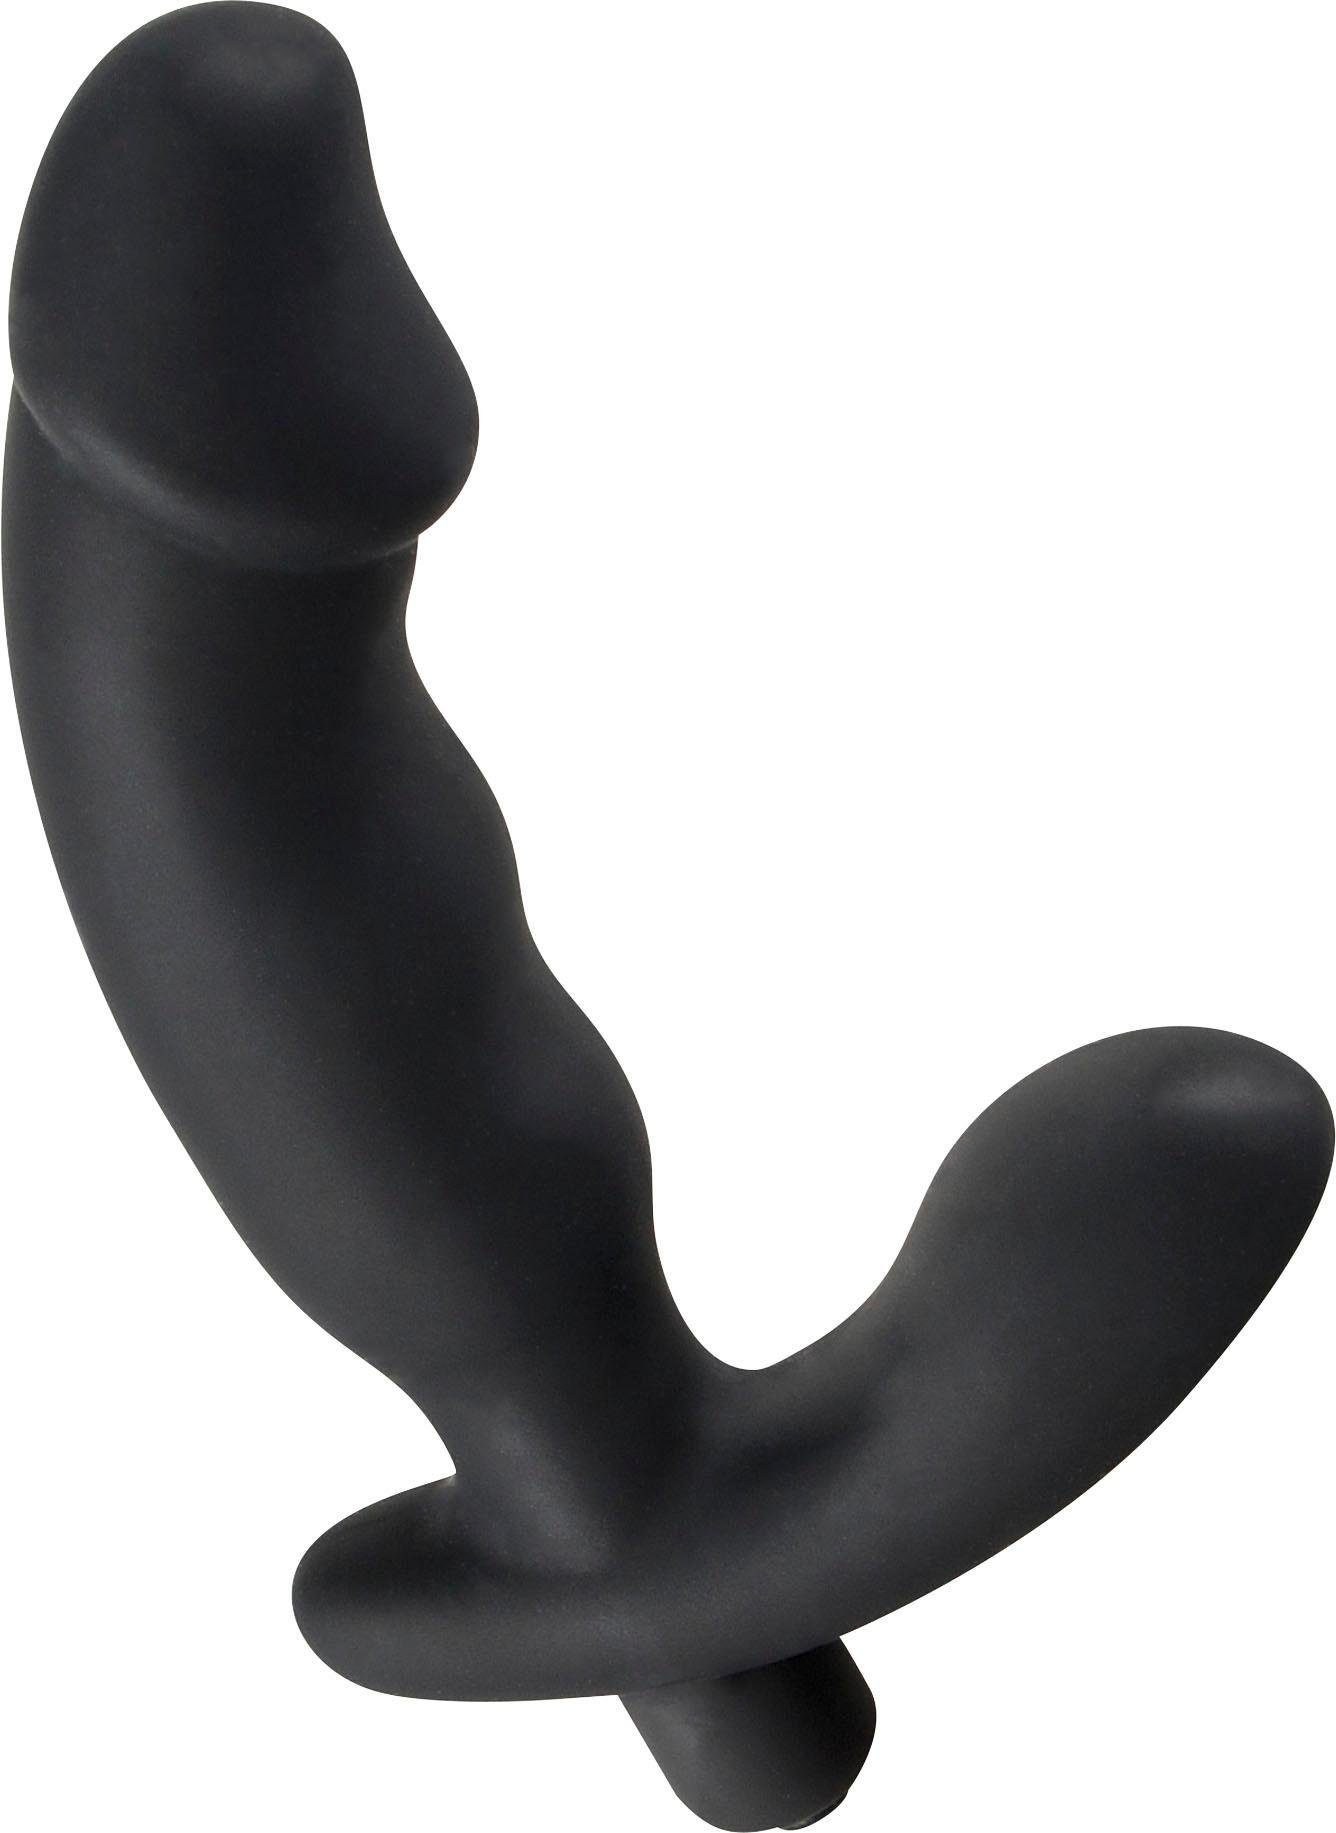 REBEL Analvibrator Stimulator Vibe, Rebel Prostata Cock-shaped